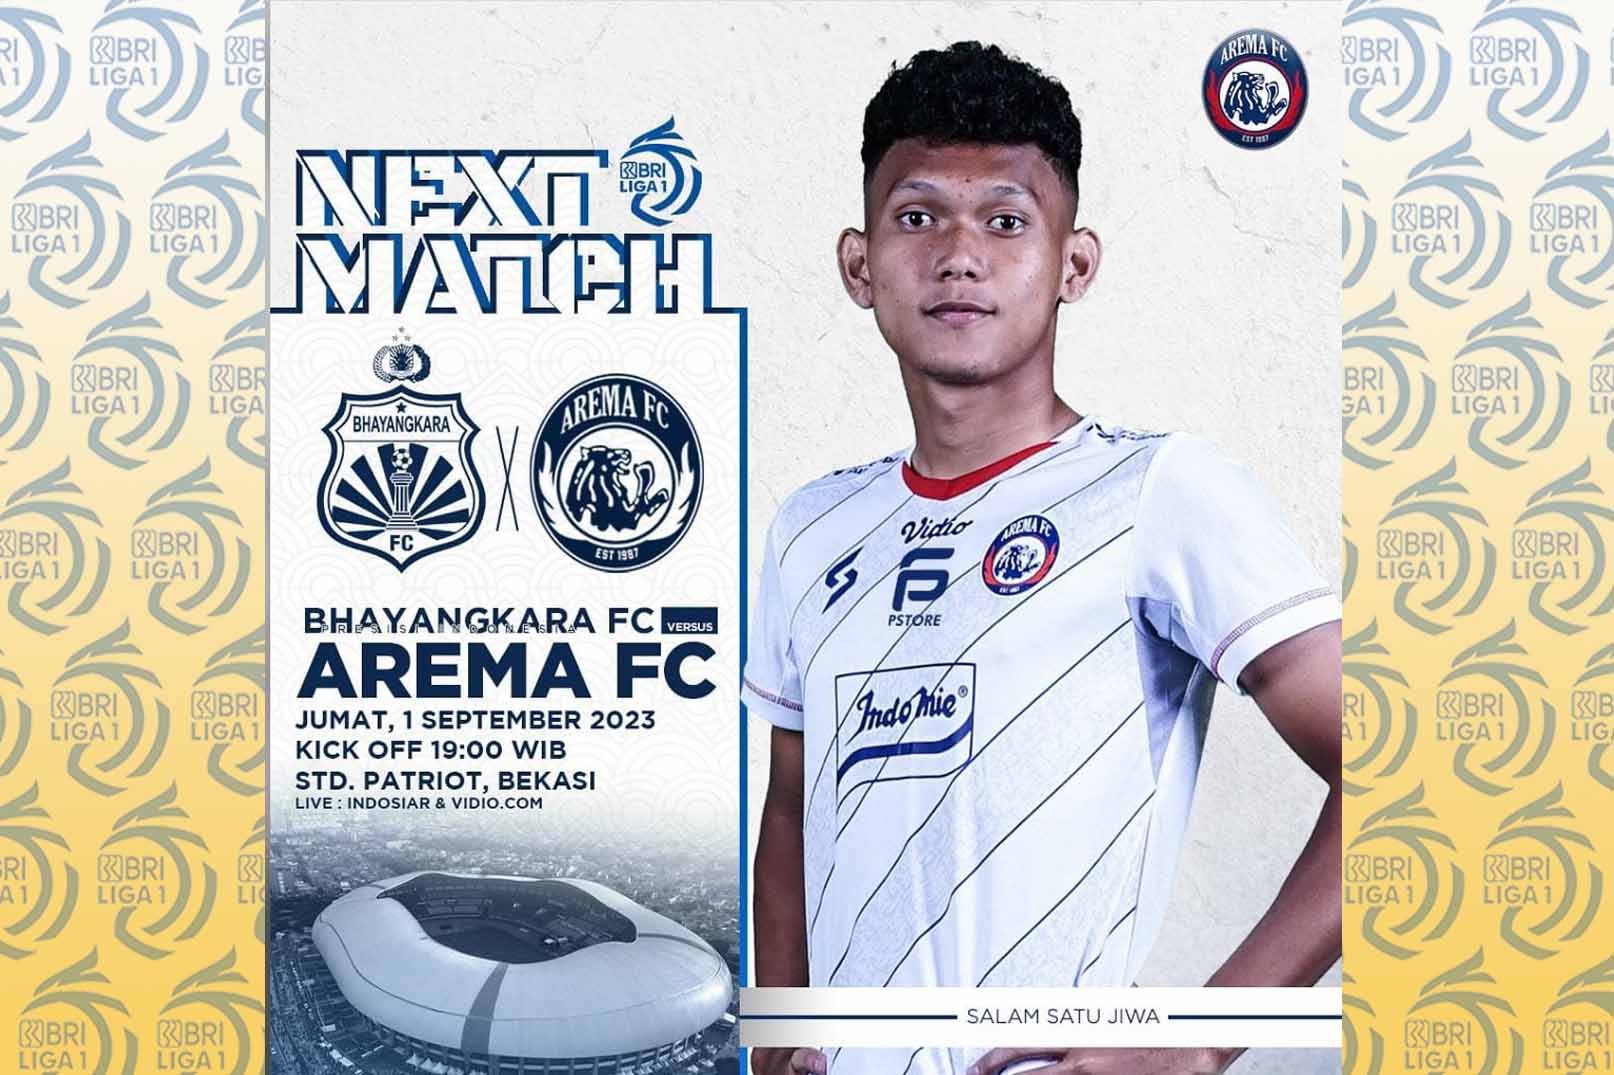 BRI Liga 1 Pekan 11 Bhayangkara FC Vs Arema FC 1 September 2023, H2H Serta Susunan Pemain